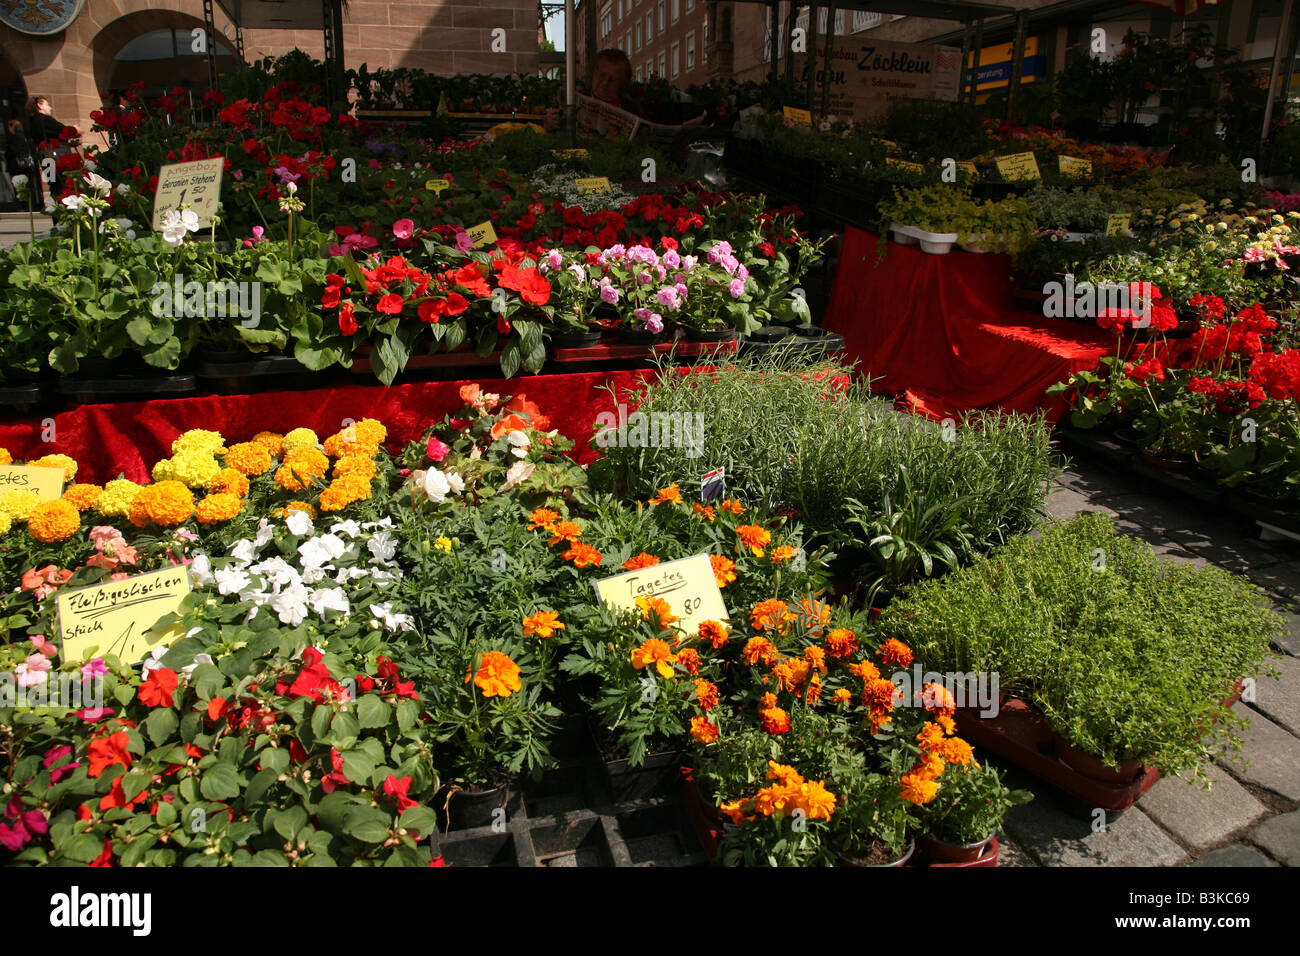 Flower market at the Hauptmarkt in Nuremberg, Germany Stock Photo